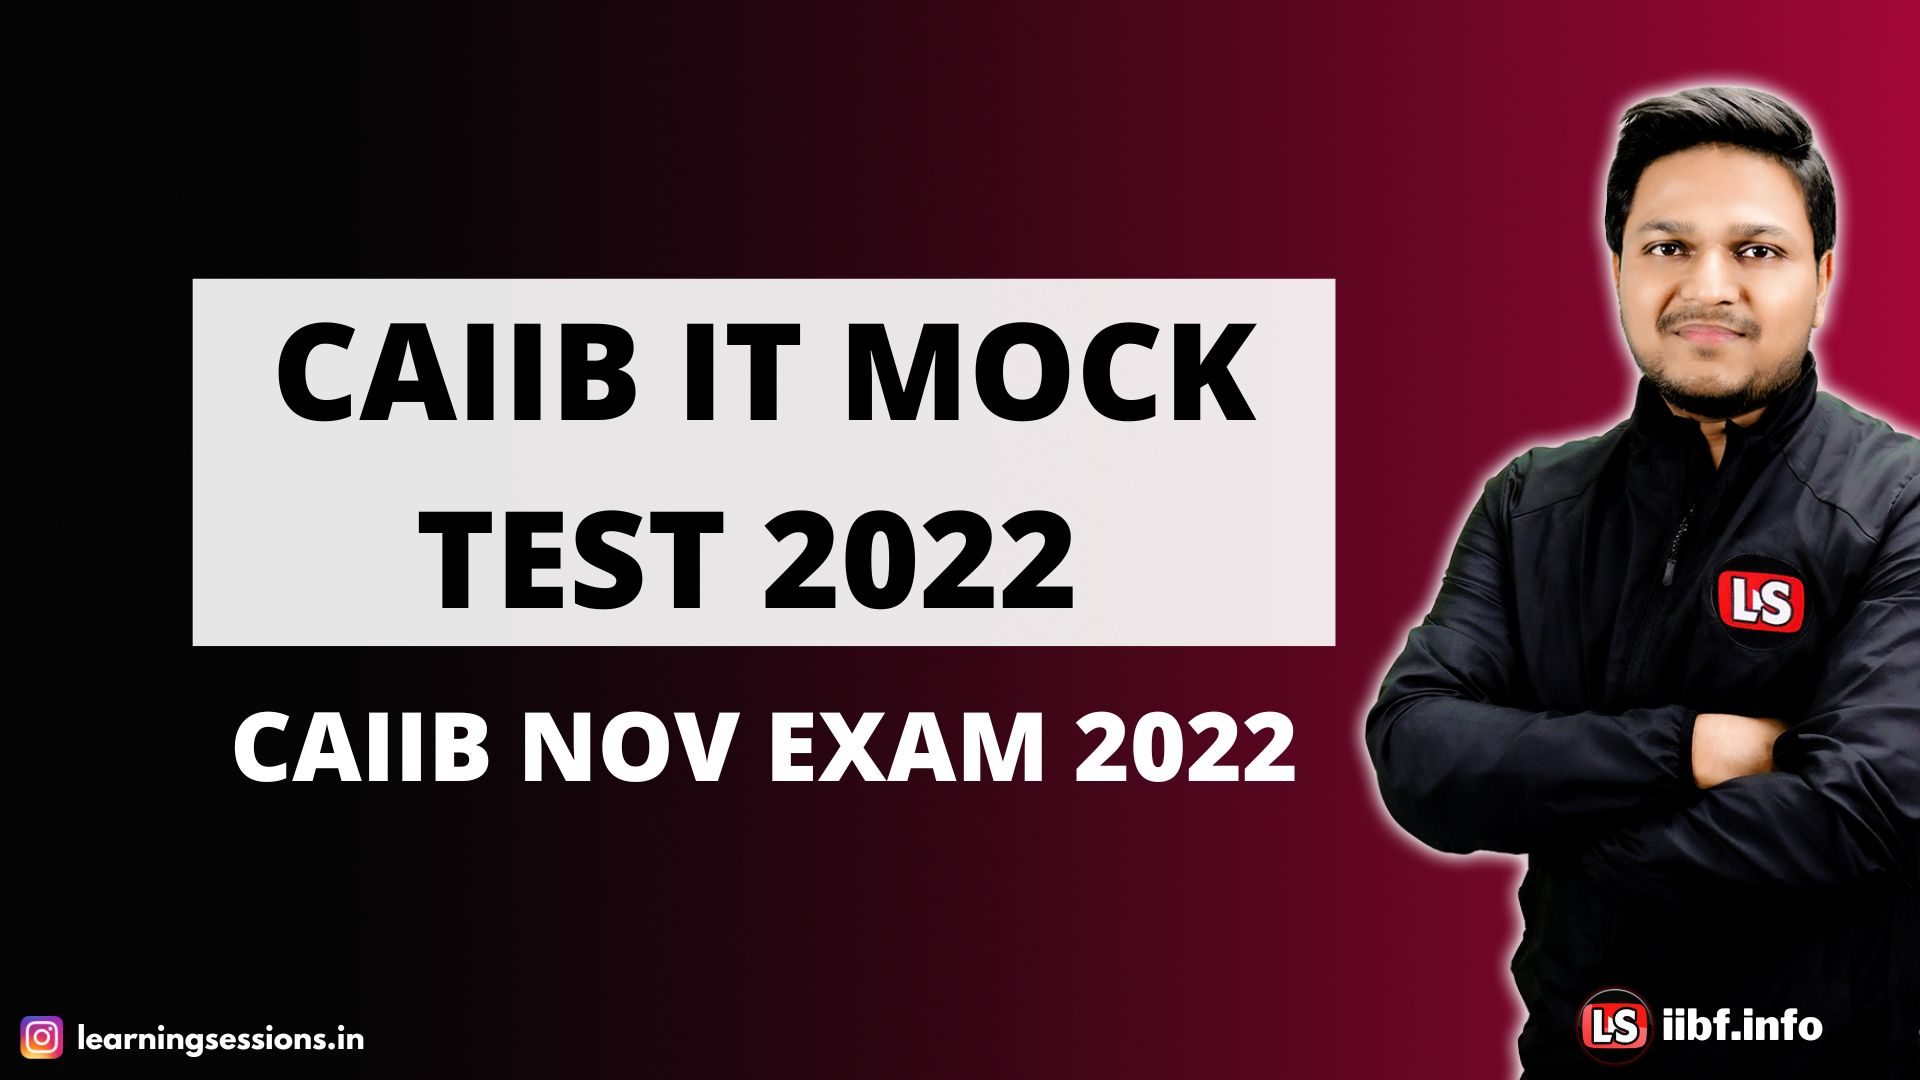 IT MOCK TEST 2022 | CAIIB DEC EXAM 2022